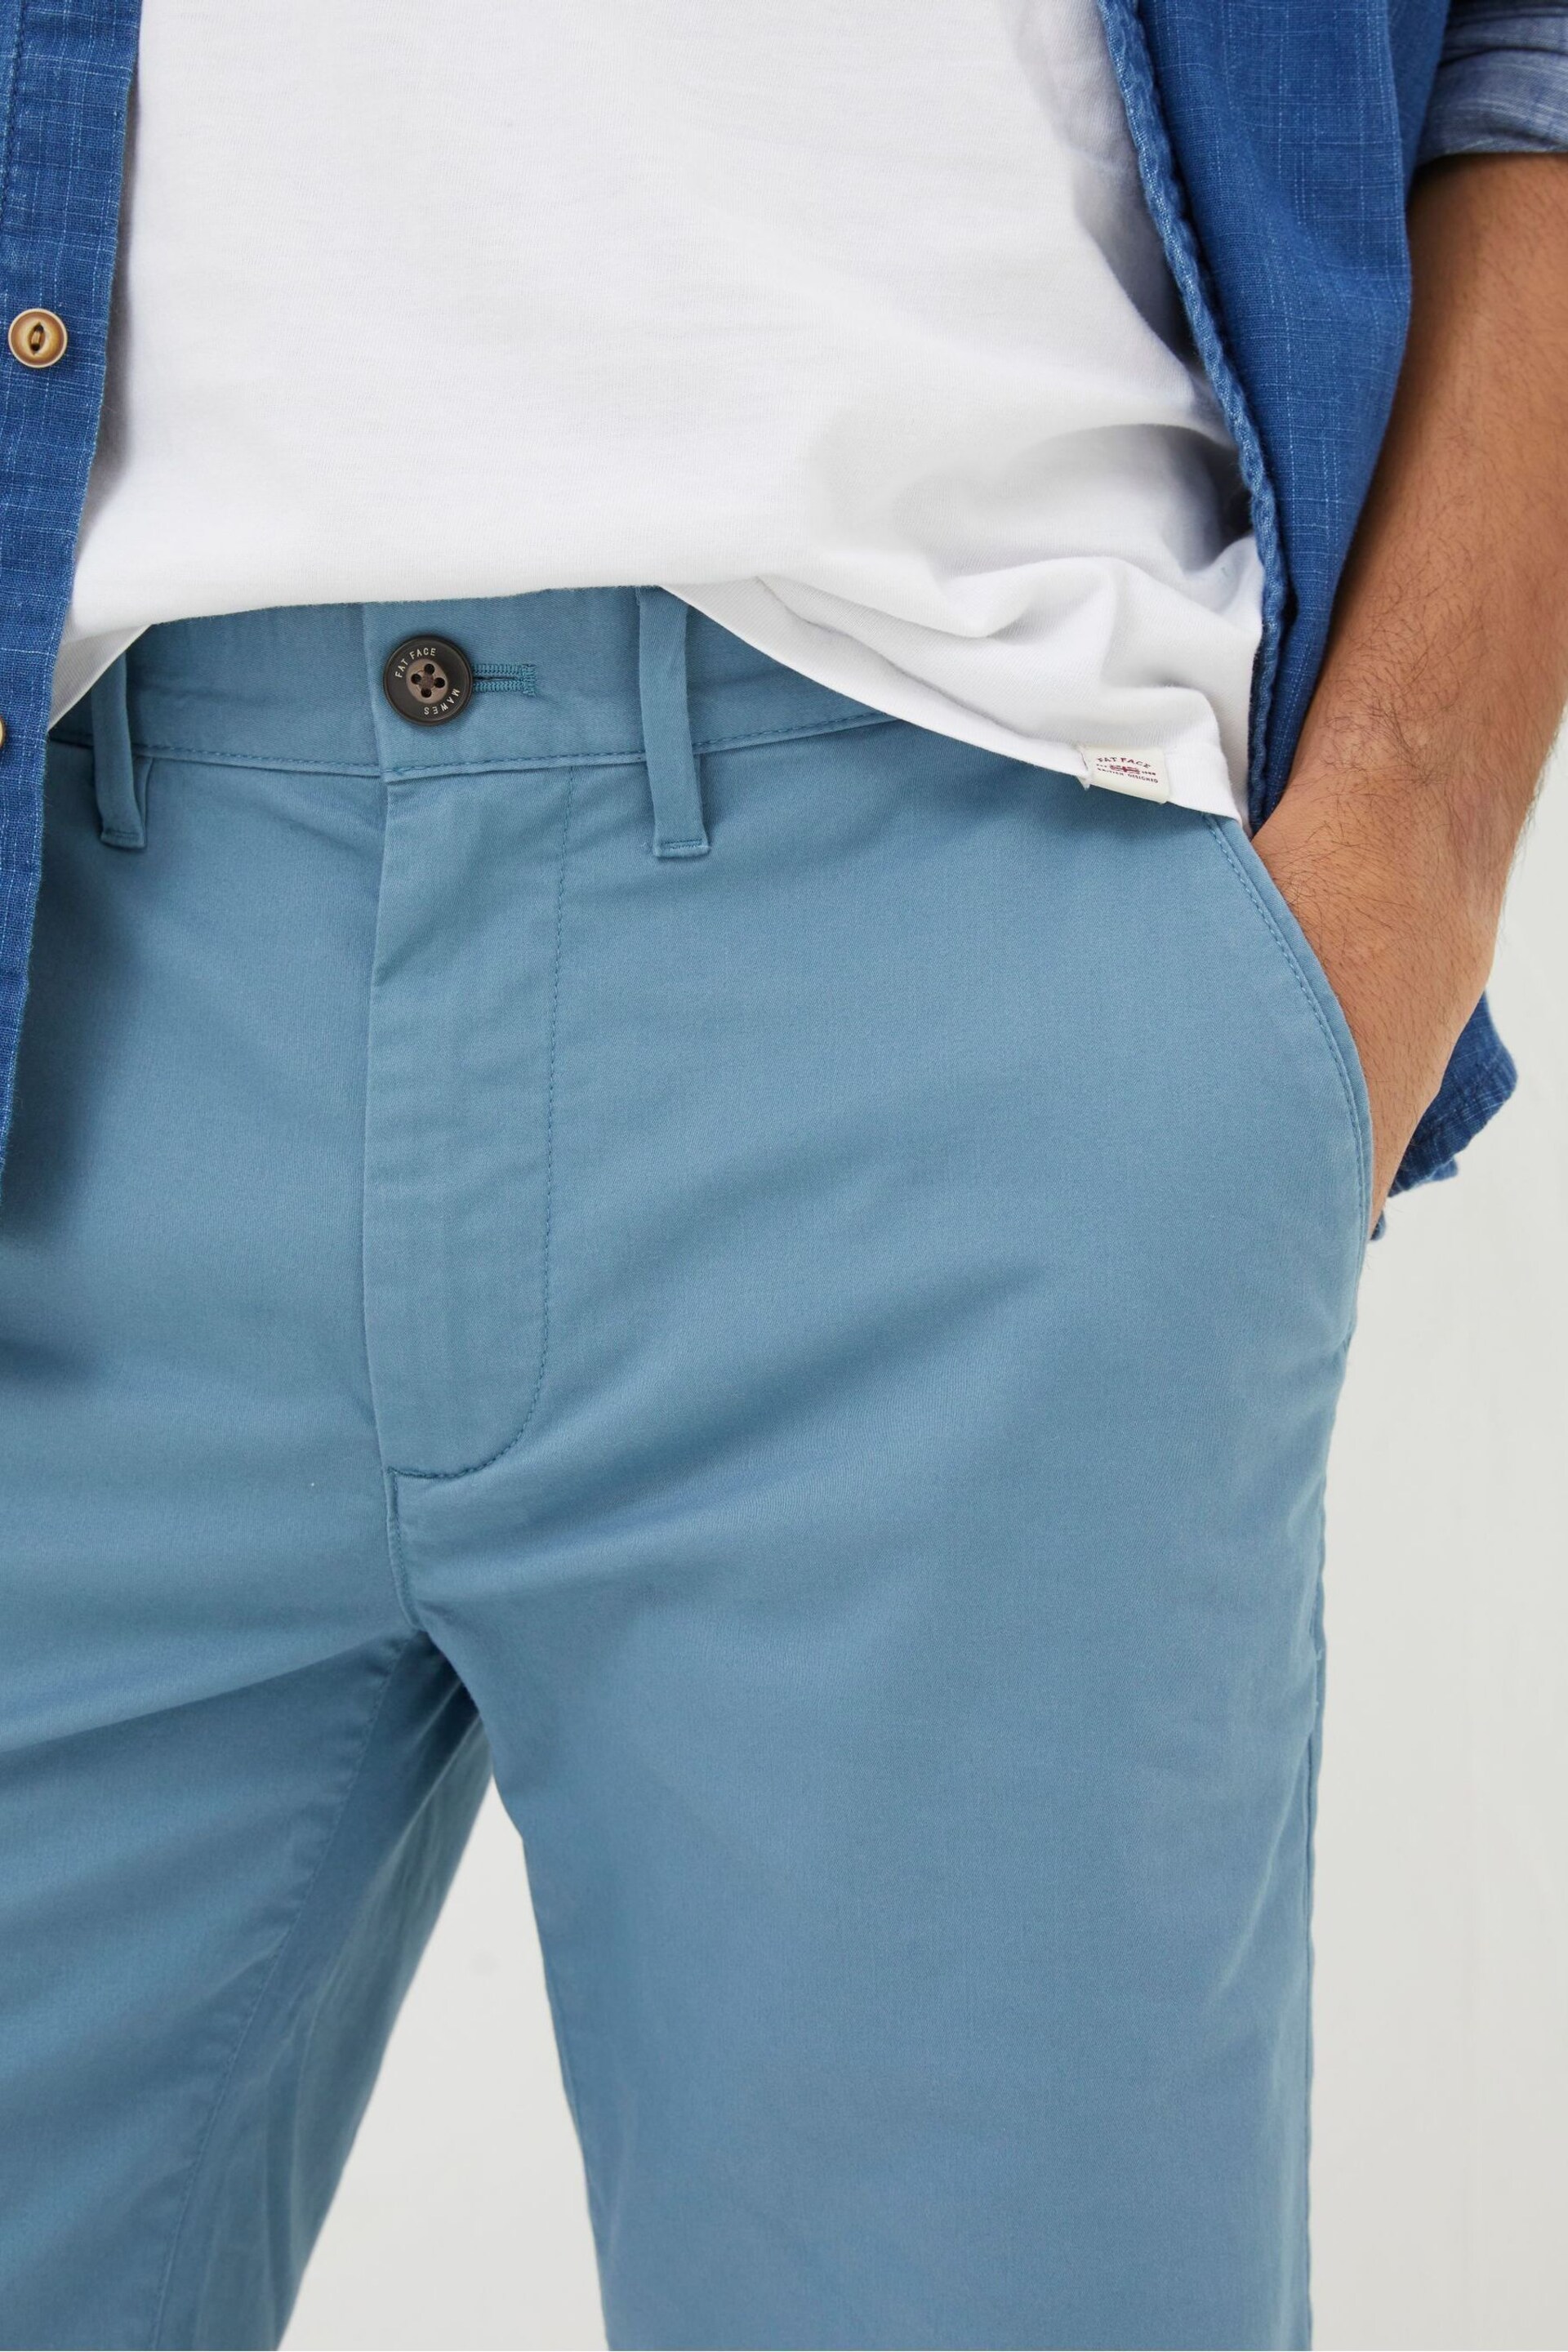 FatFace Blue Mawes Chino Shorts - Image 3 of 4